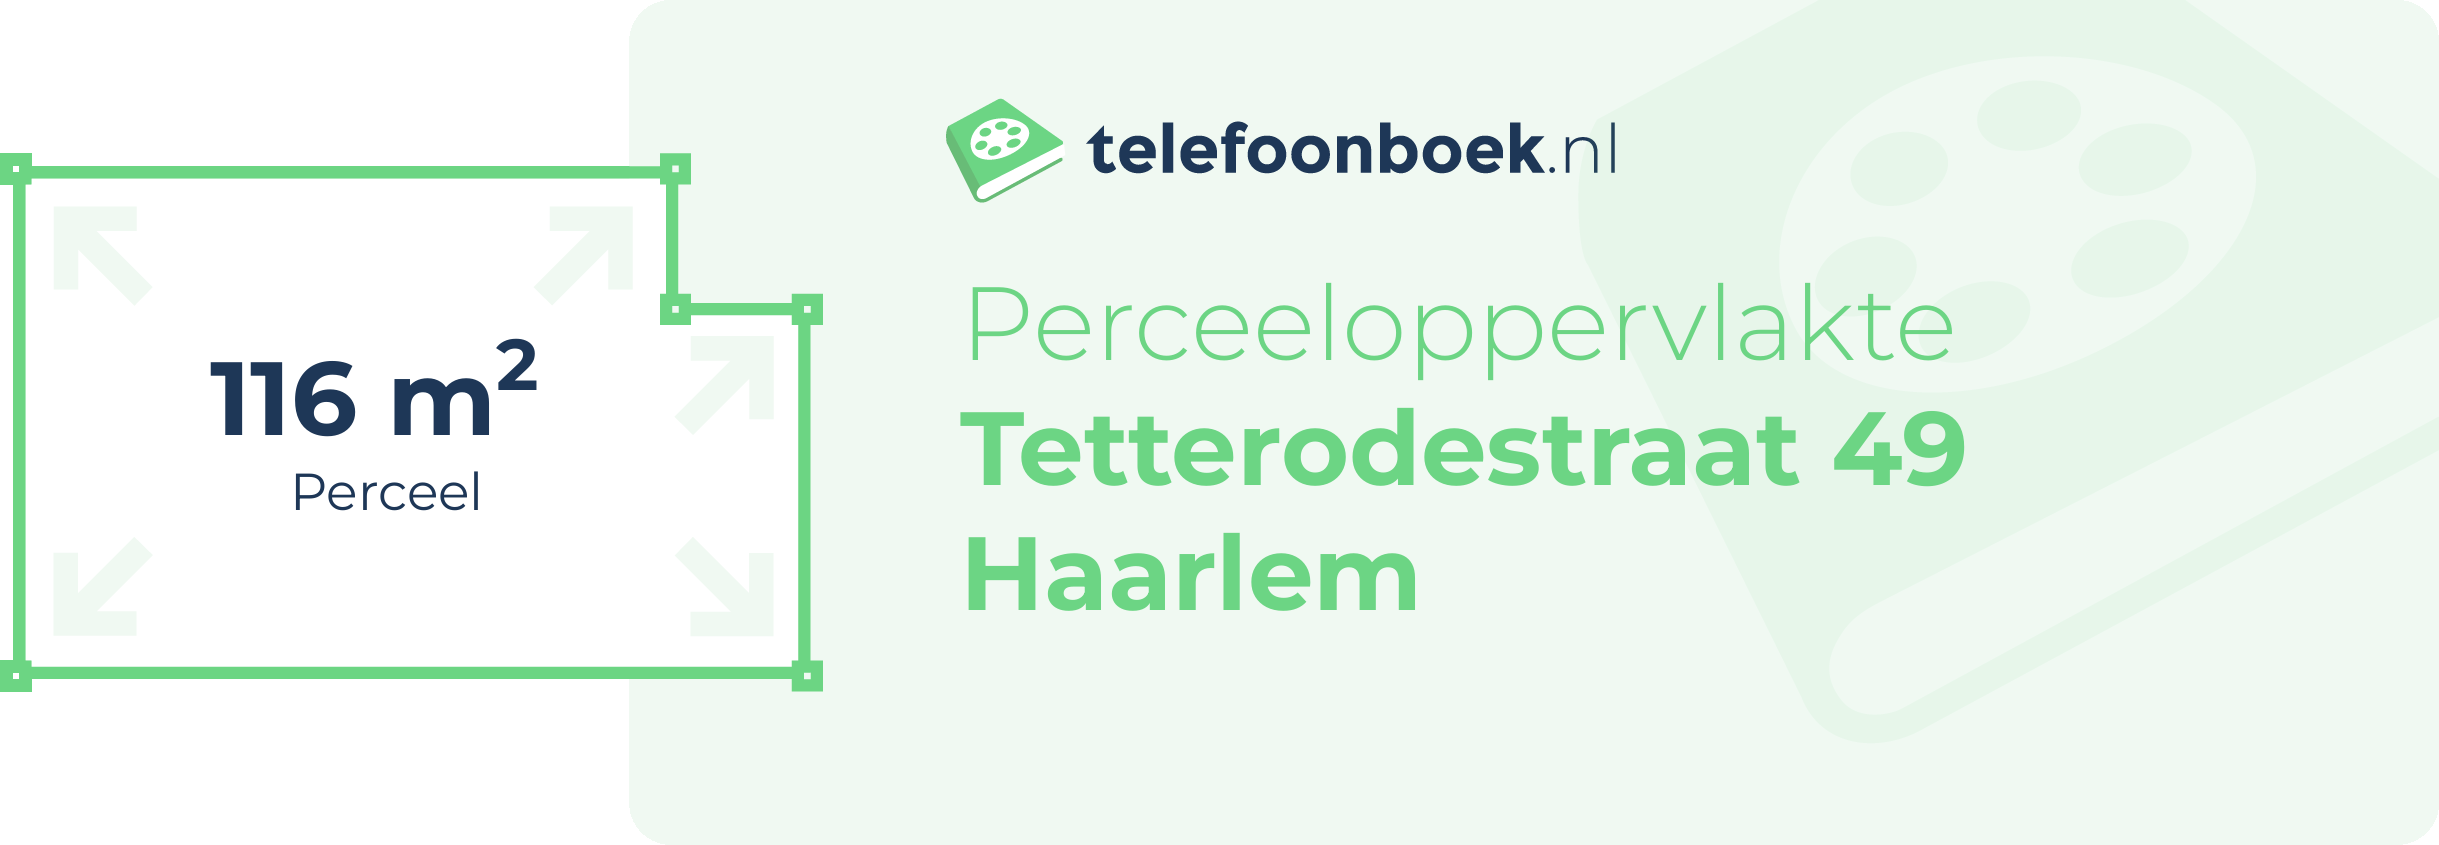 Perceeloppervlakte Tetterodestraat 49 Haarlem